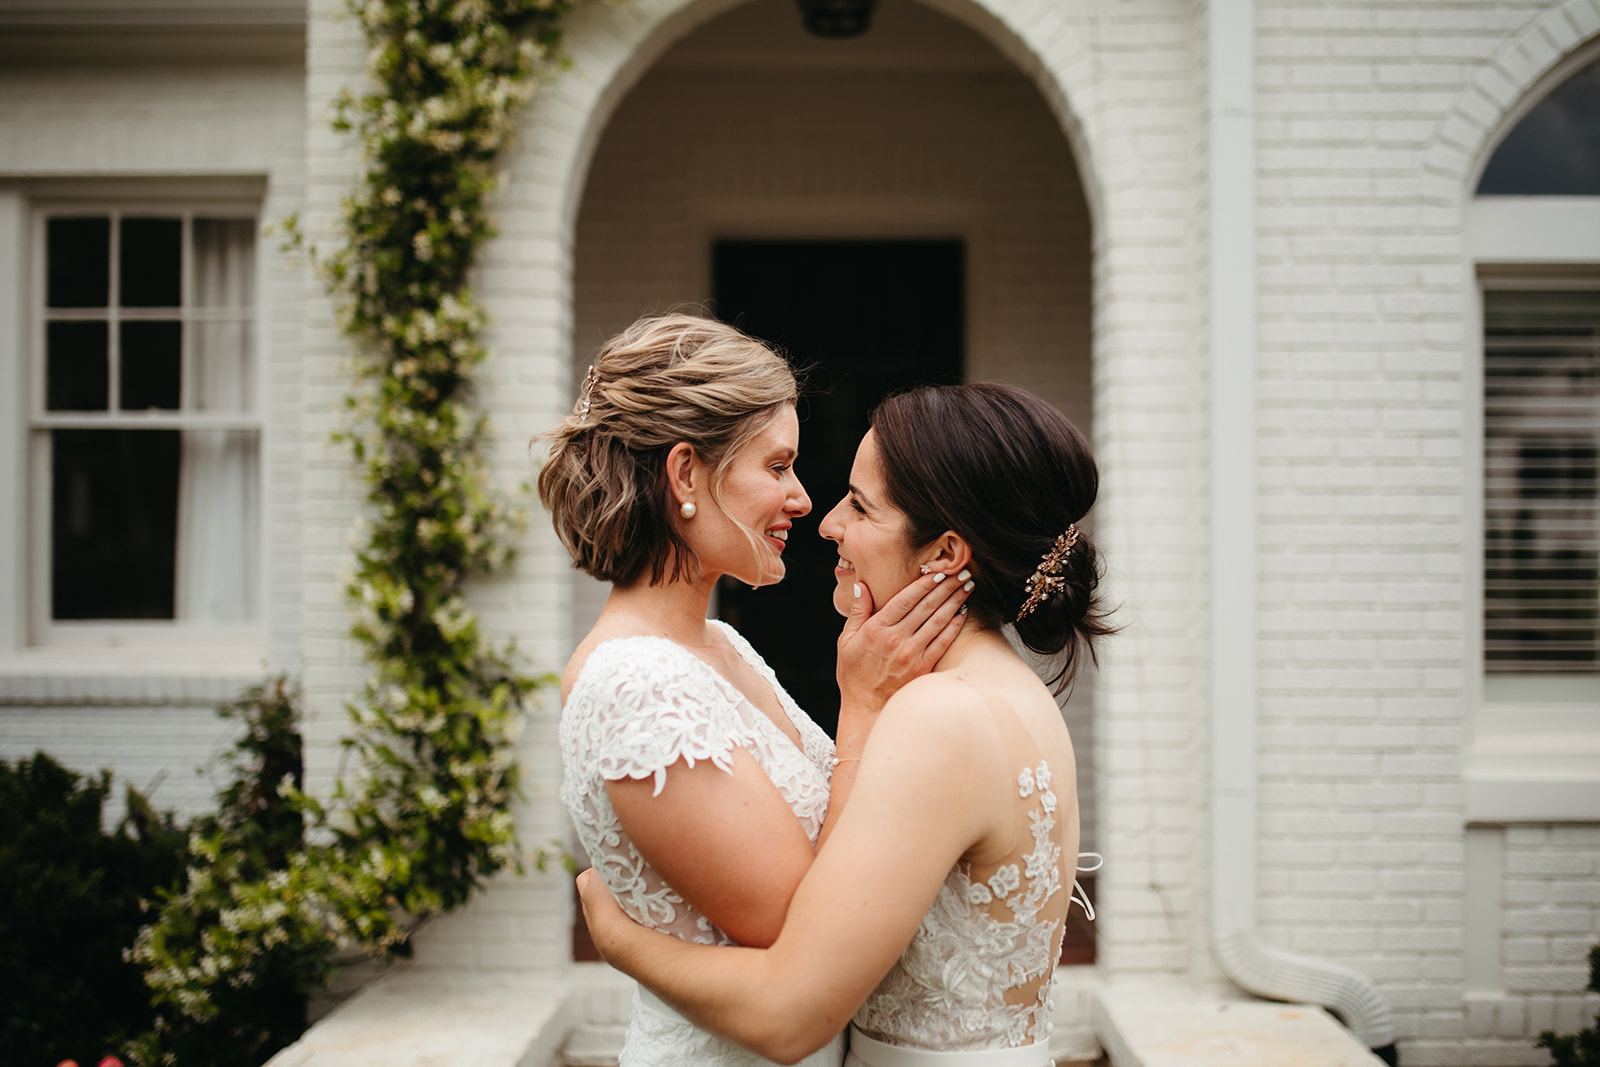 LGBTQ+ affirming wedding photographer